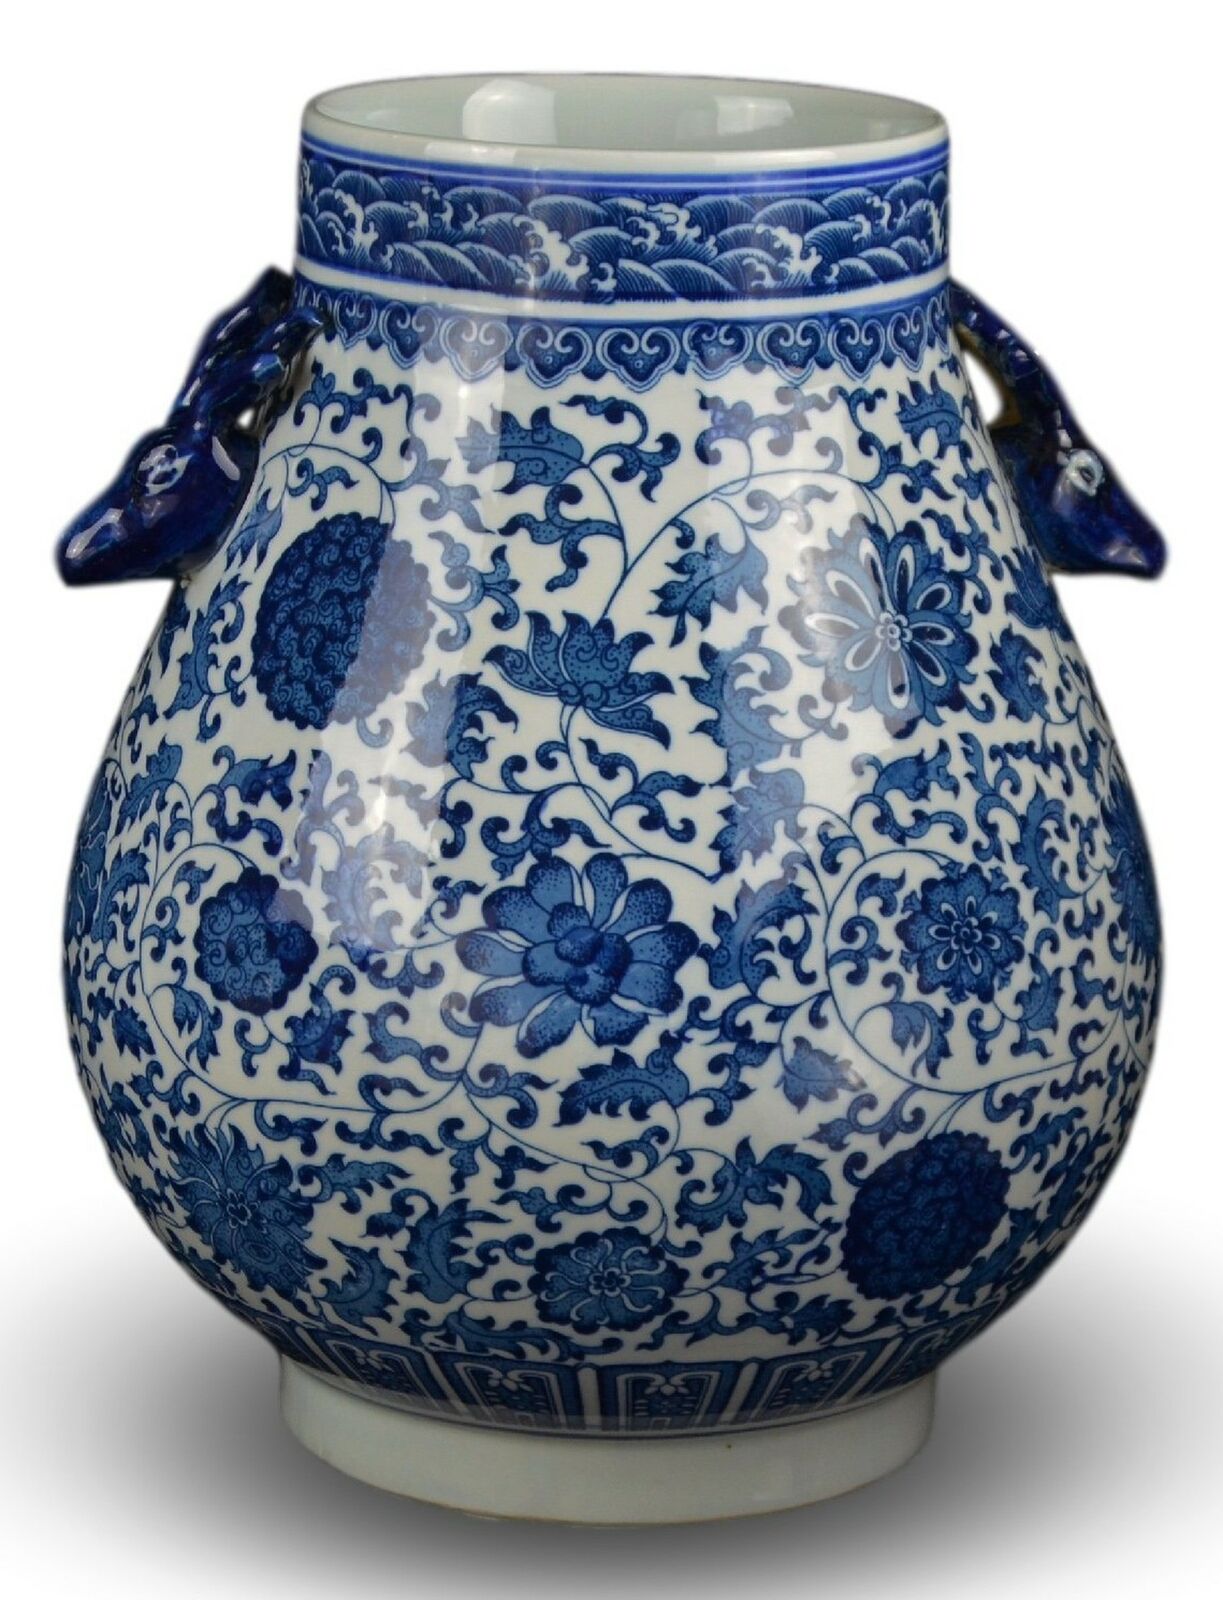 Festcool Classic Blue and White Floral Porcelain Vase, Double Deer Head Handl...